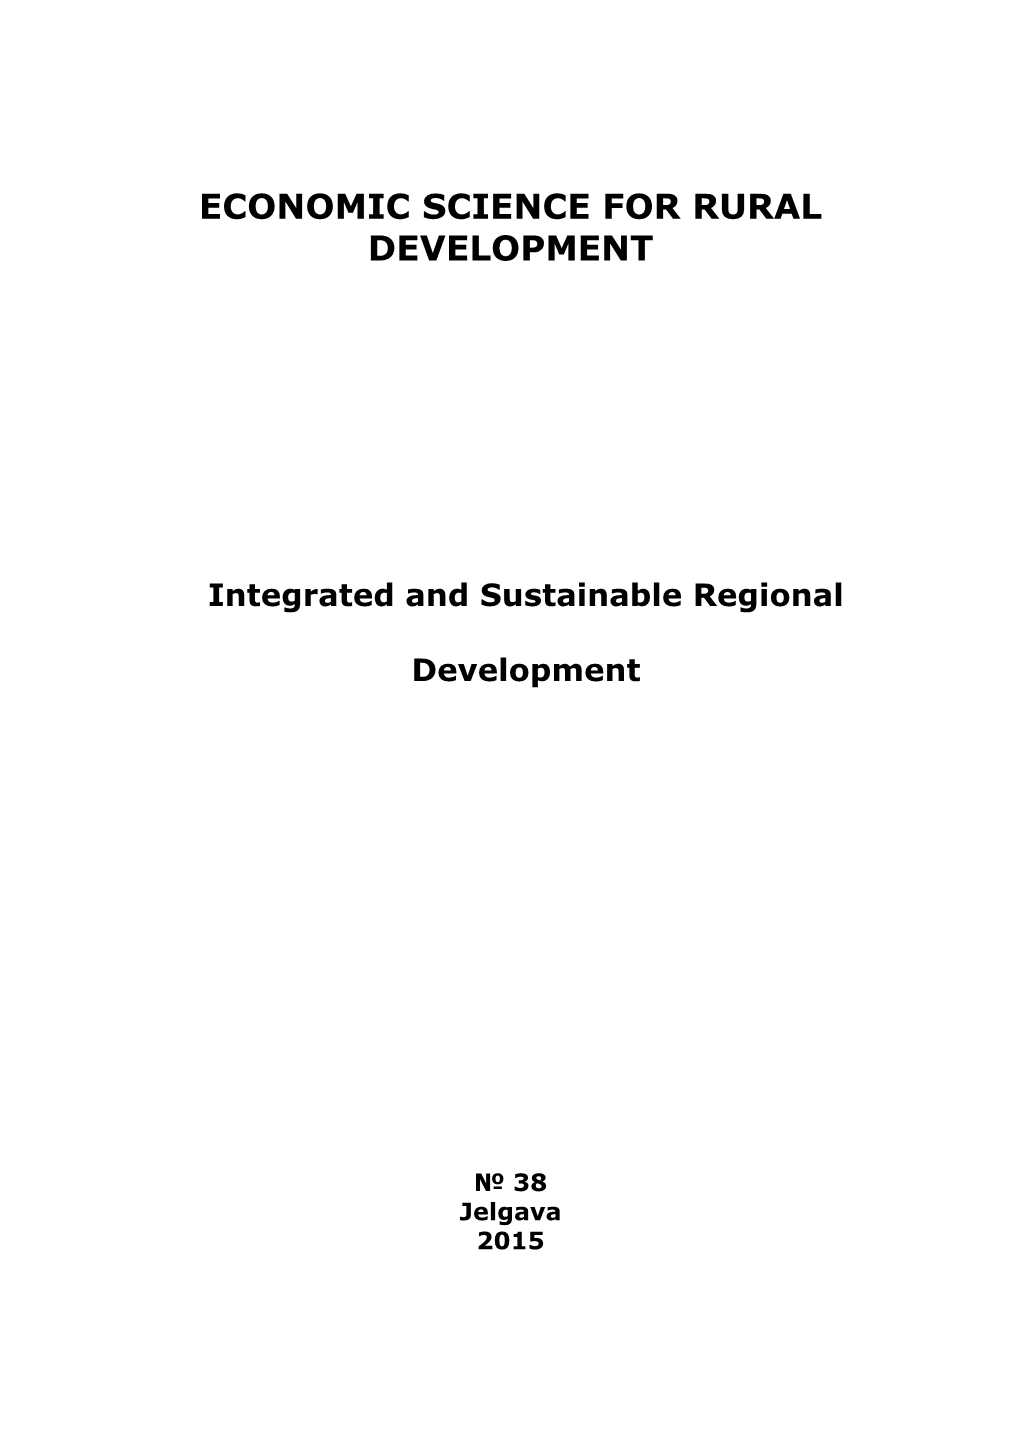 Economic Science for Rural Development